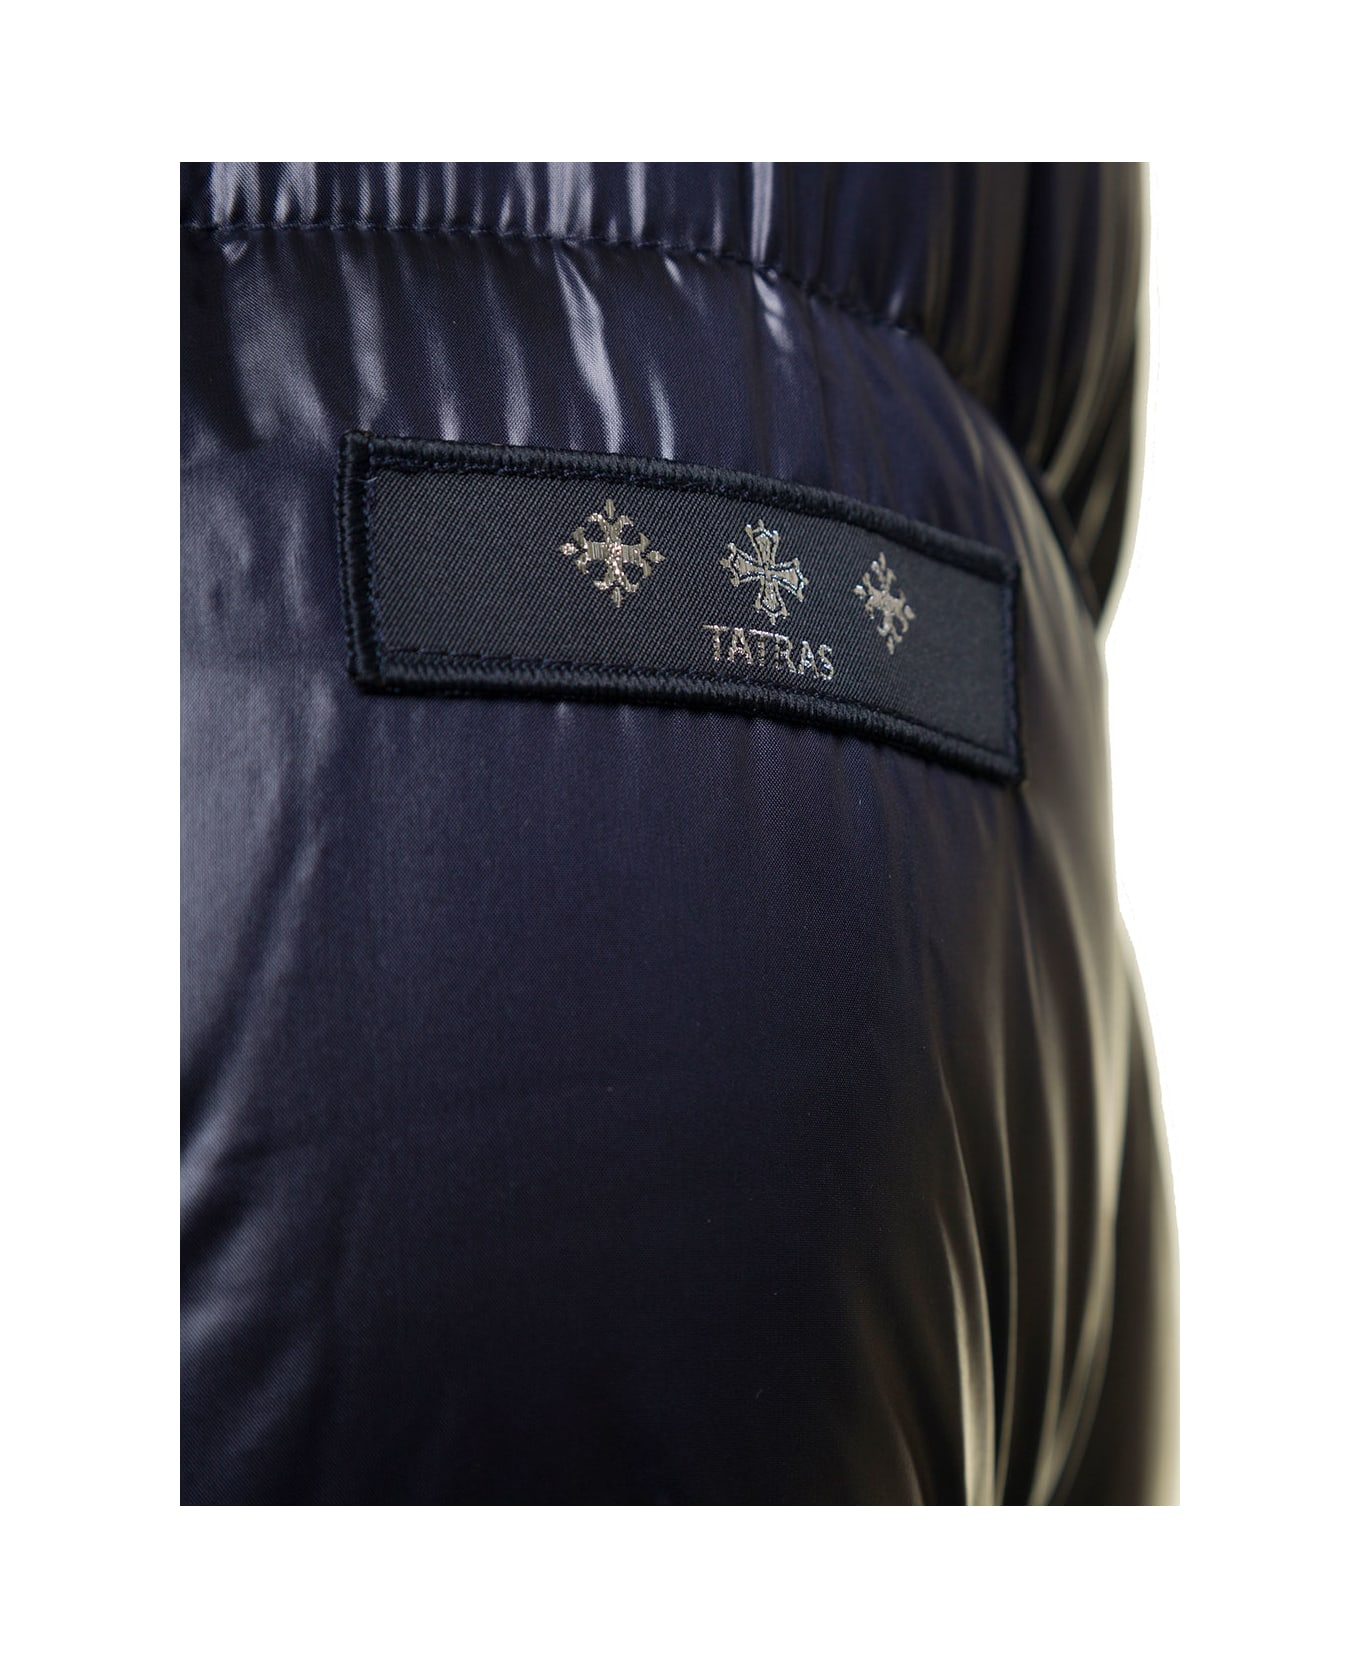 TATRAS 'mejikino' Long Blue Down Jacket With Hood And Logo Patch In Shiny Nylon Man - Blu コート